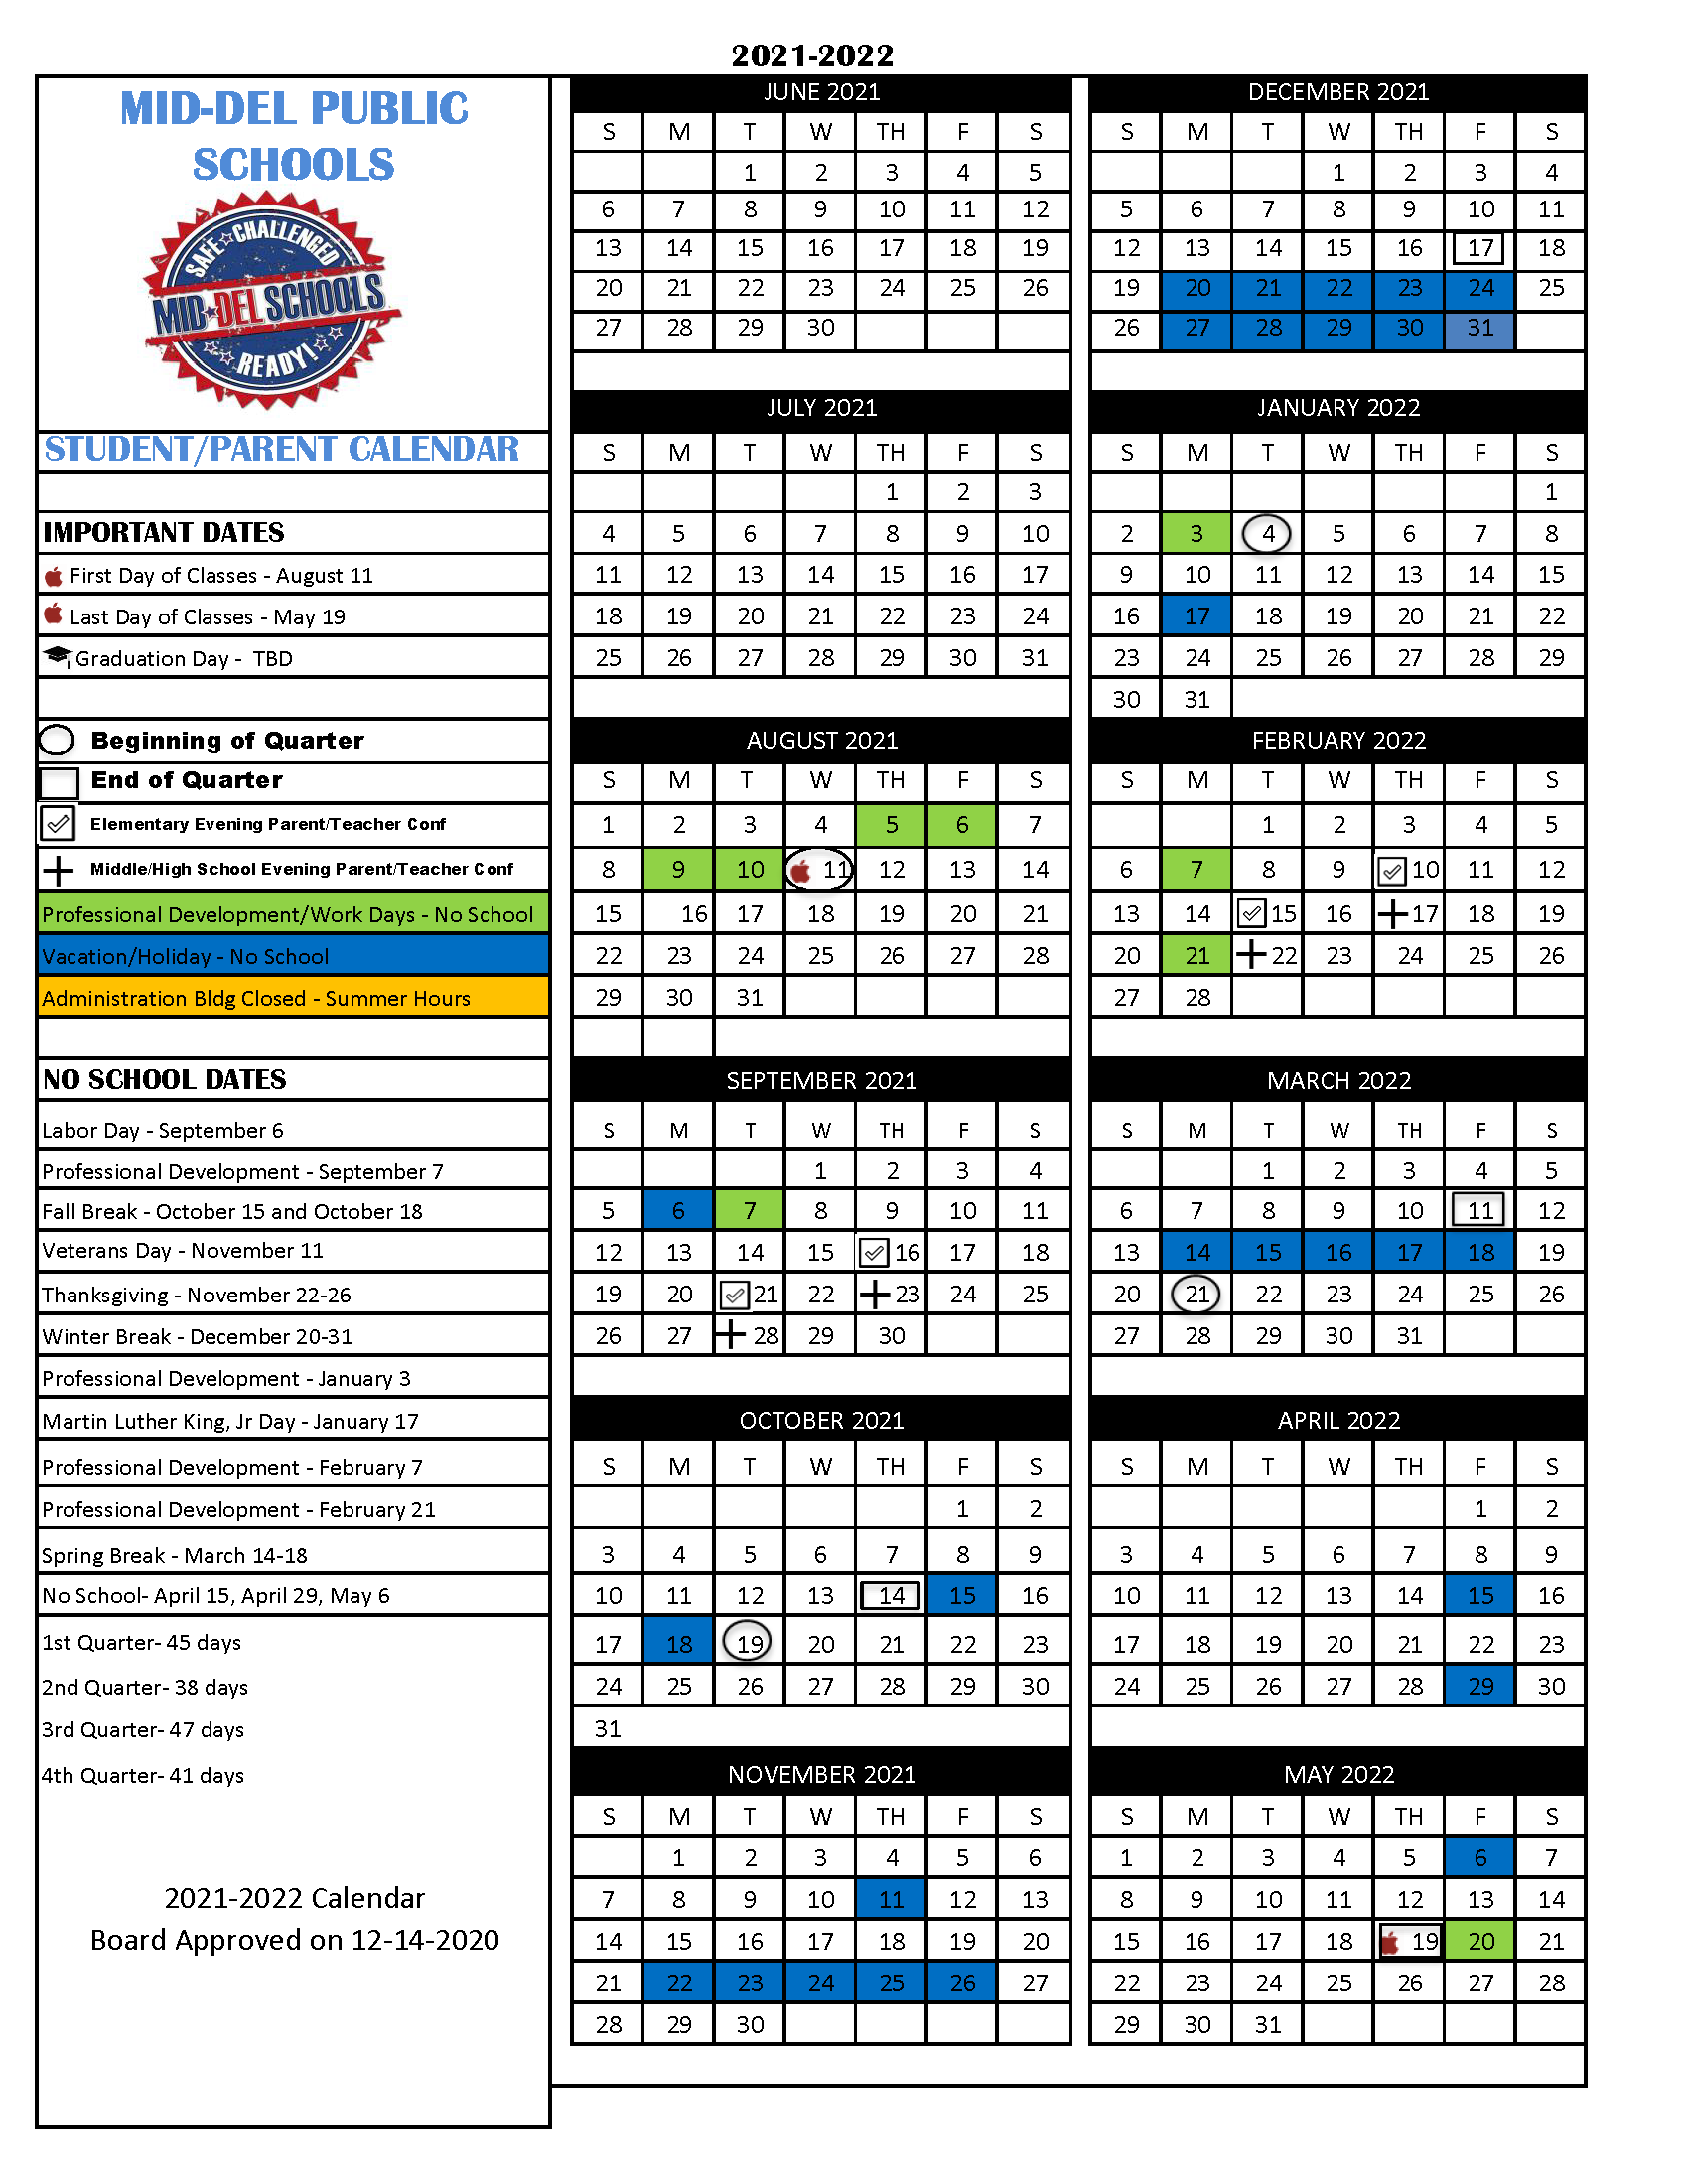 City Tech Academic Calendar Spring 2022 2021-2022 School Calendar | Mid-Del School District